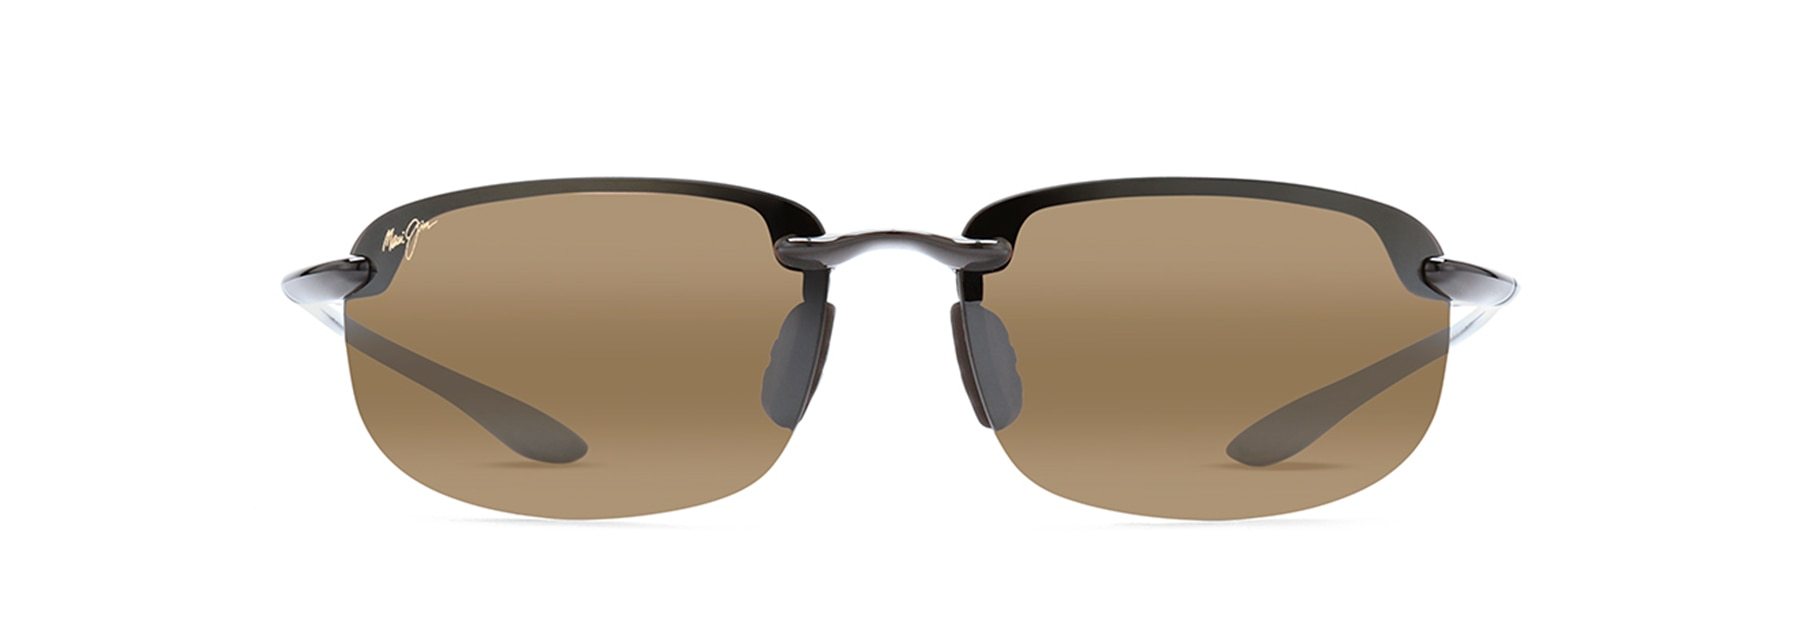 MyMaui Ho'Okipa MM407-002 Sunglasses